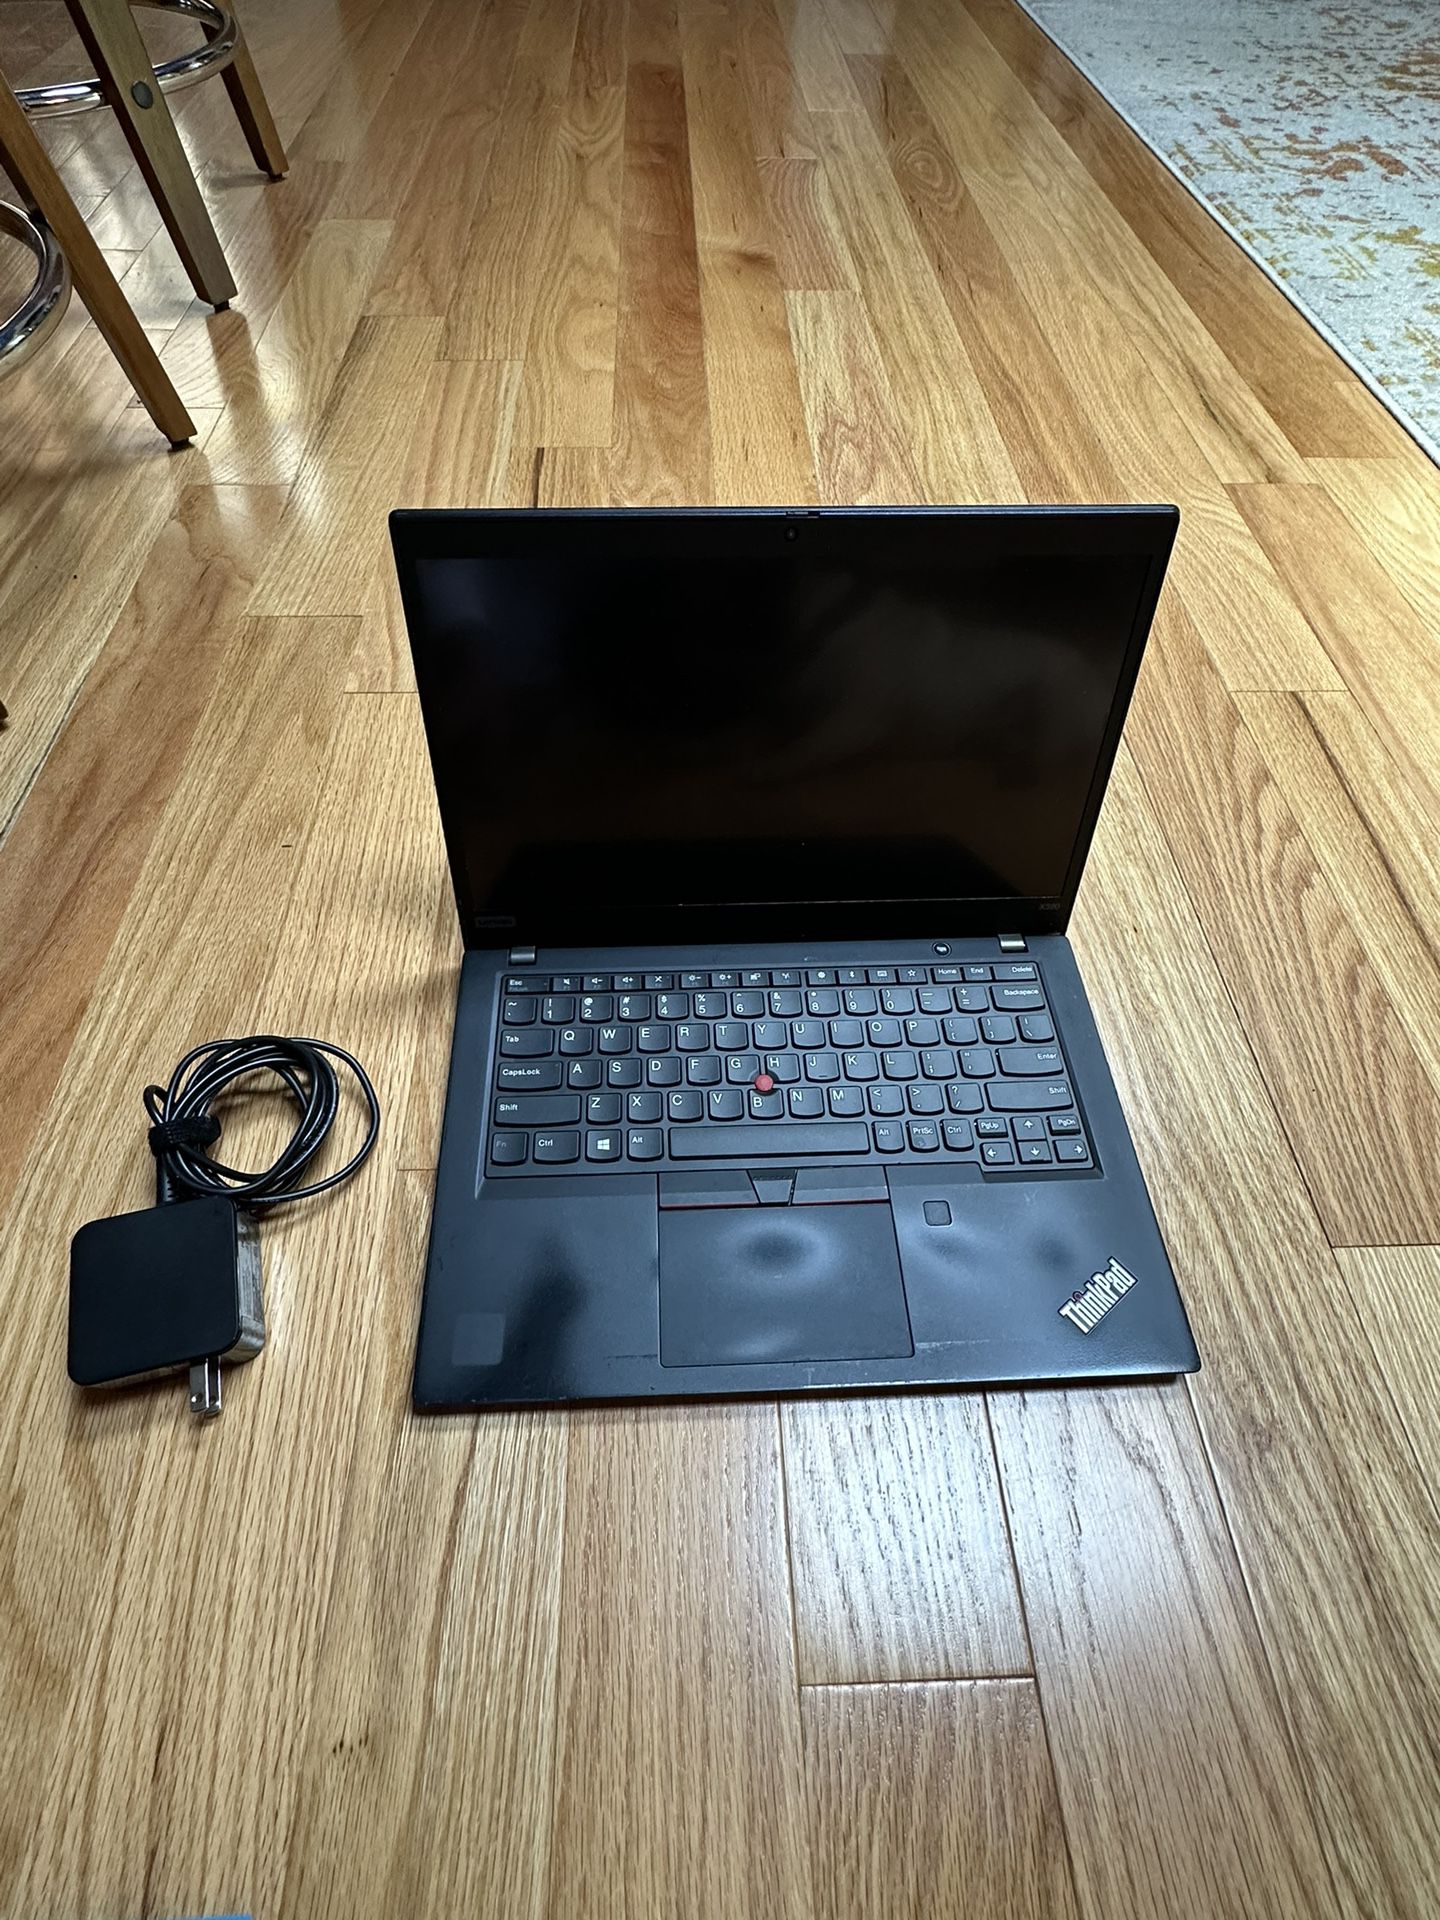 Lenovo X390 Windows 10 Laptop - Intel Core i5, 16gb, 500gb Ssd Touchscreen